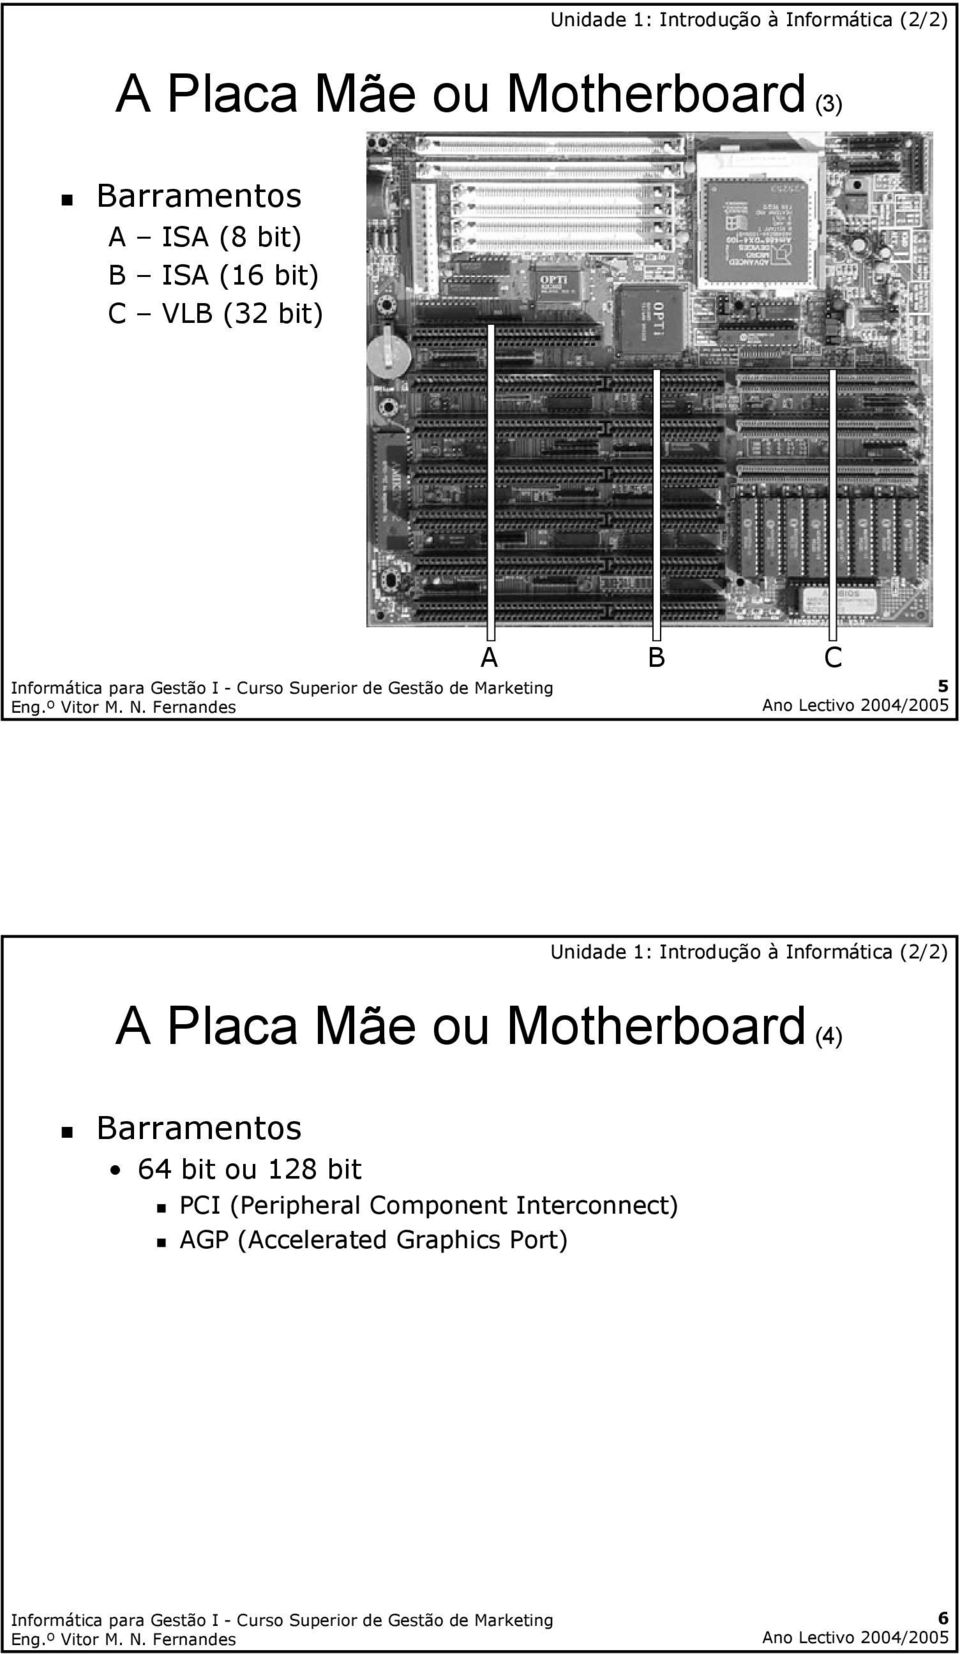 Motherboard (4) Barramentos 64 bit ou 128 bit PCI